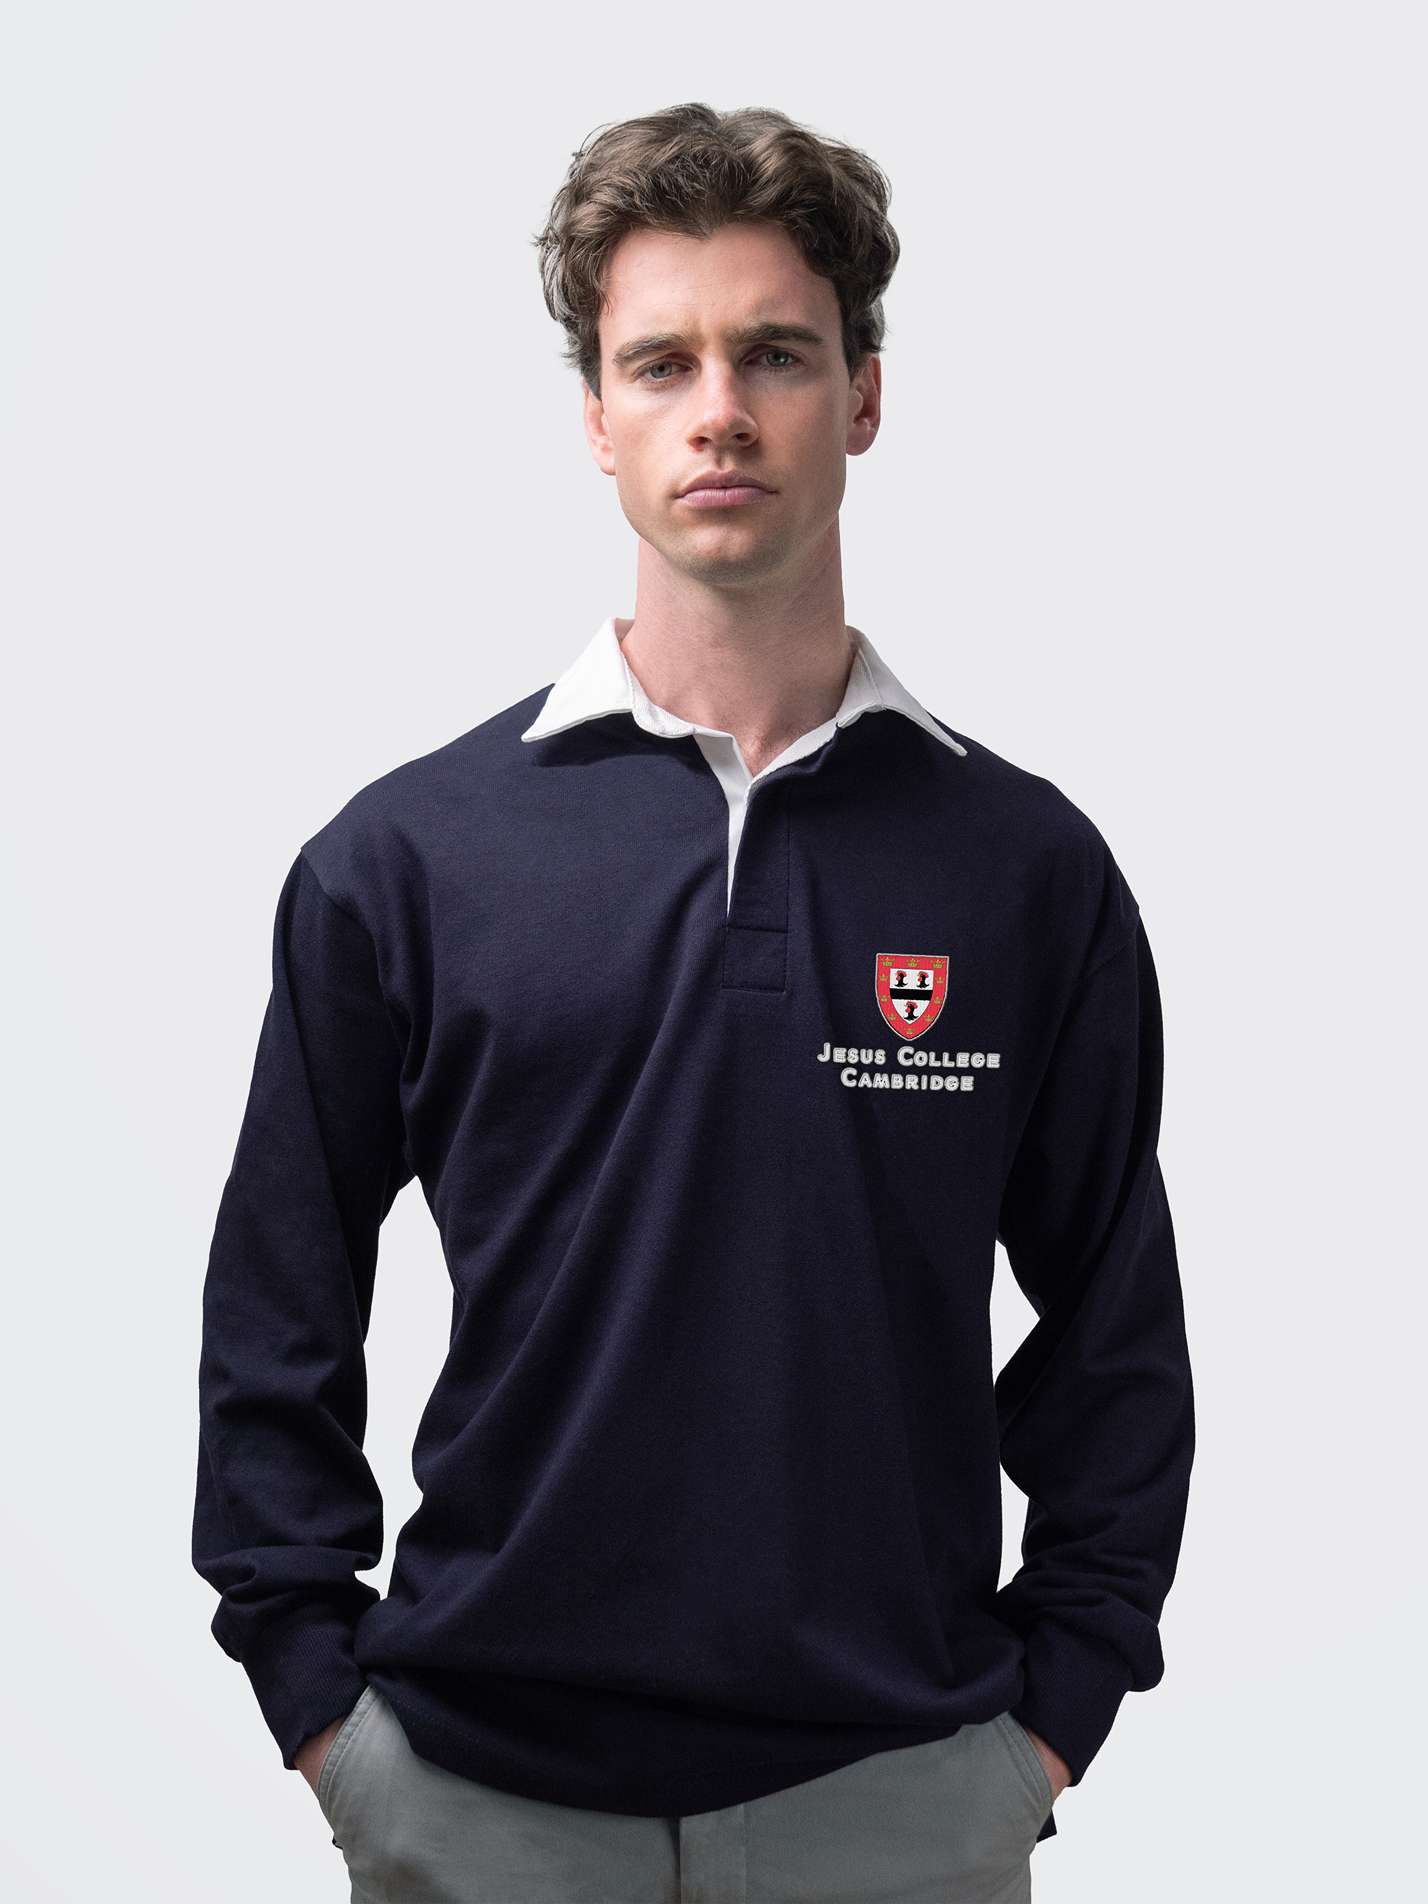 Jesus College Cambridge JCR Classic Men's Rugby Shirt